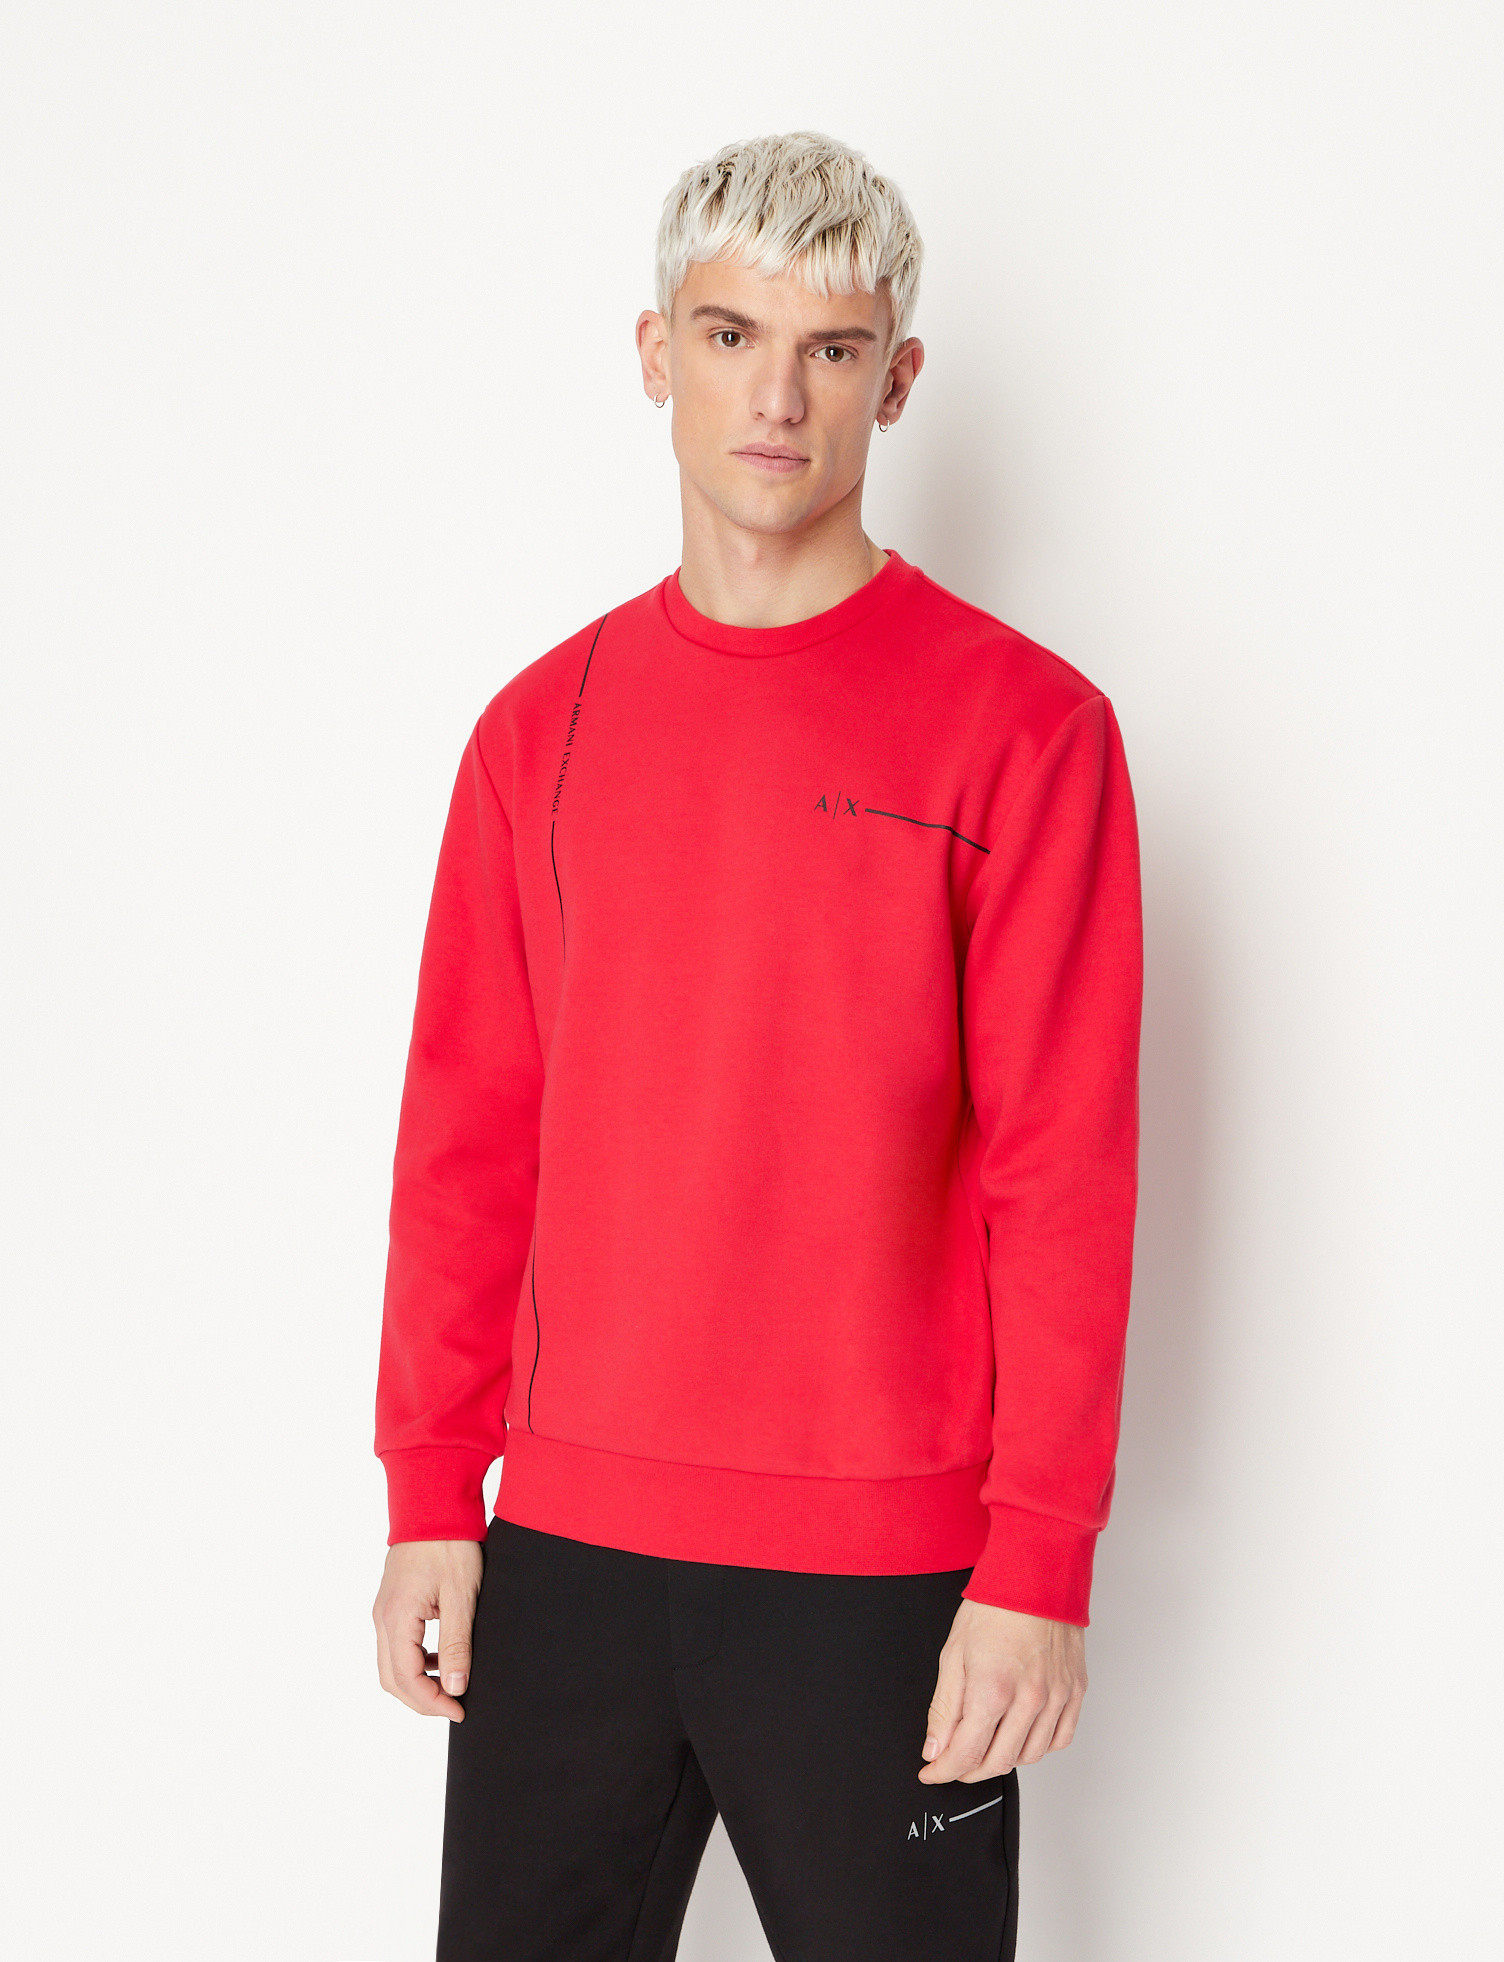 Armani Exchange - Sweatshirt with logo print, Red, large image number 1